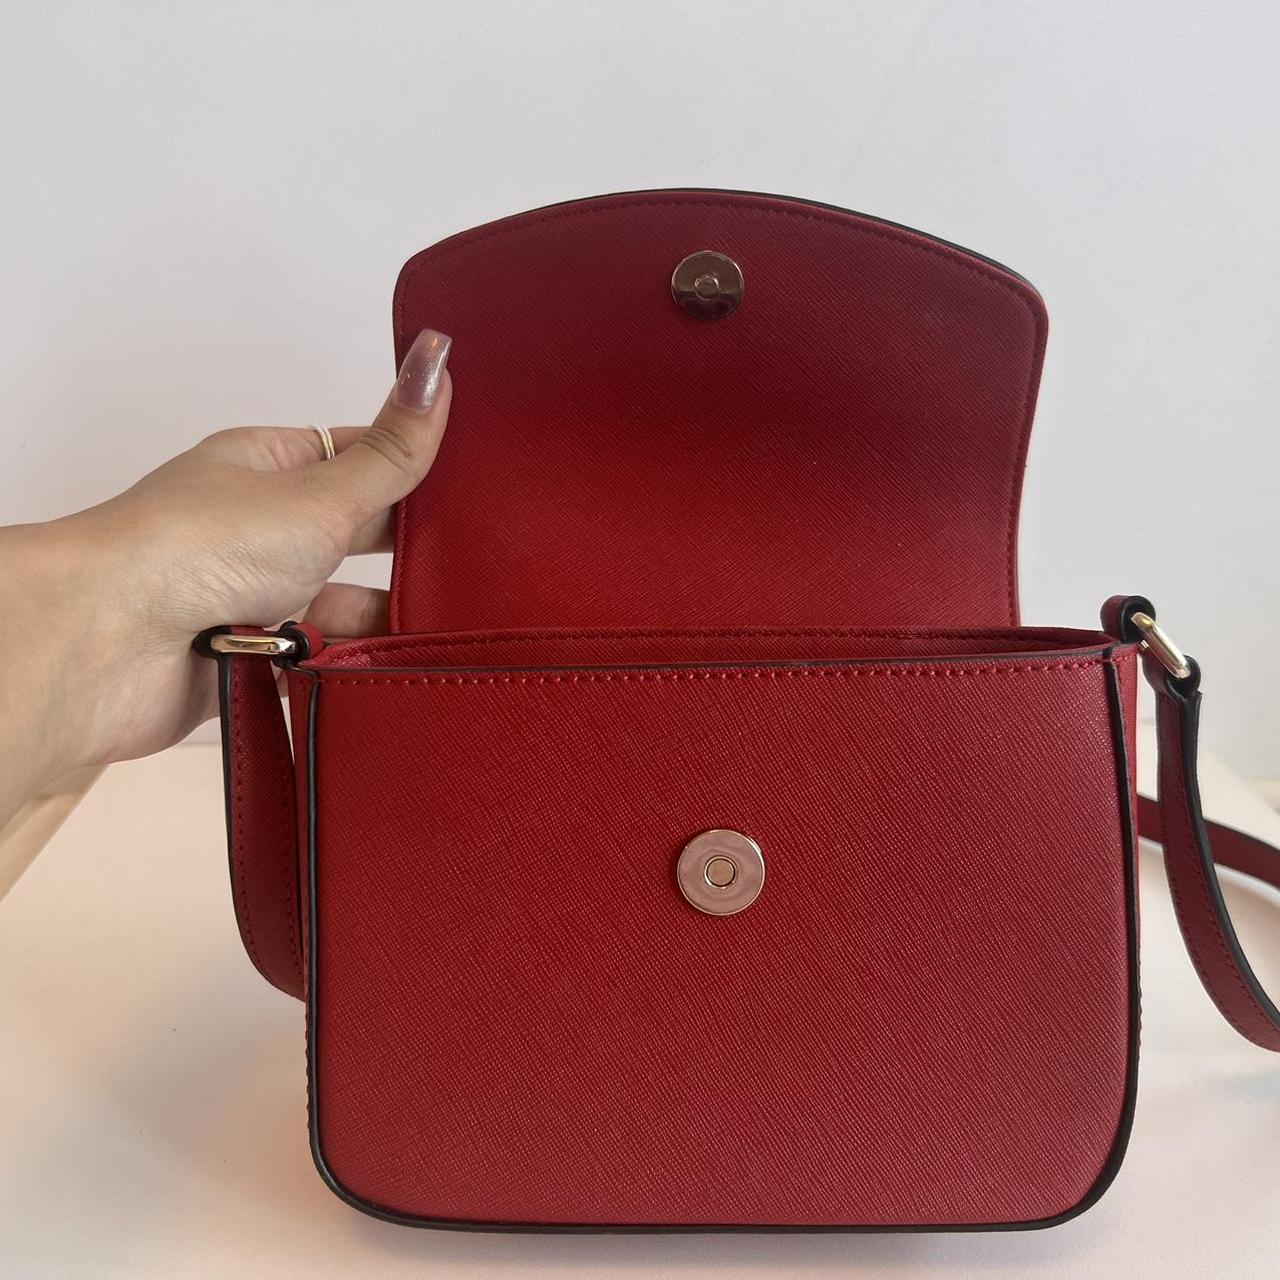 Dkny Sina medium shoulder flap handbag – USASHOPDIRECT LLC